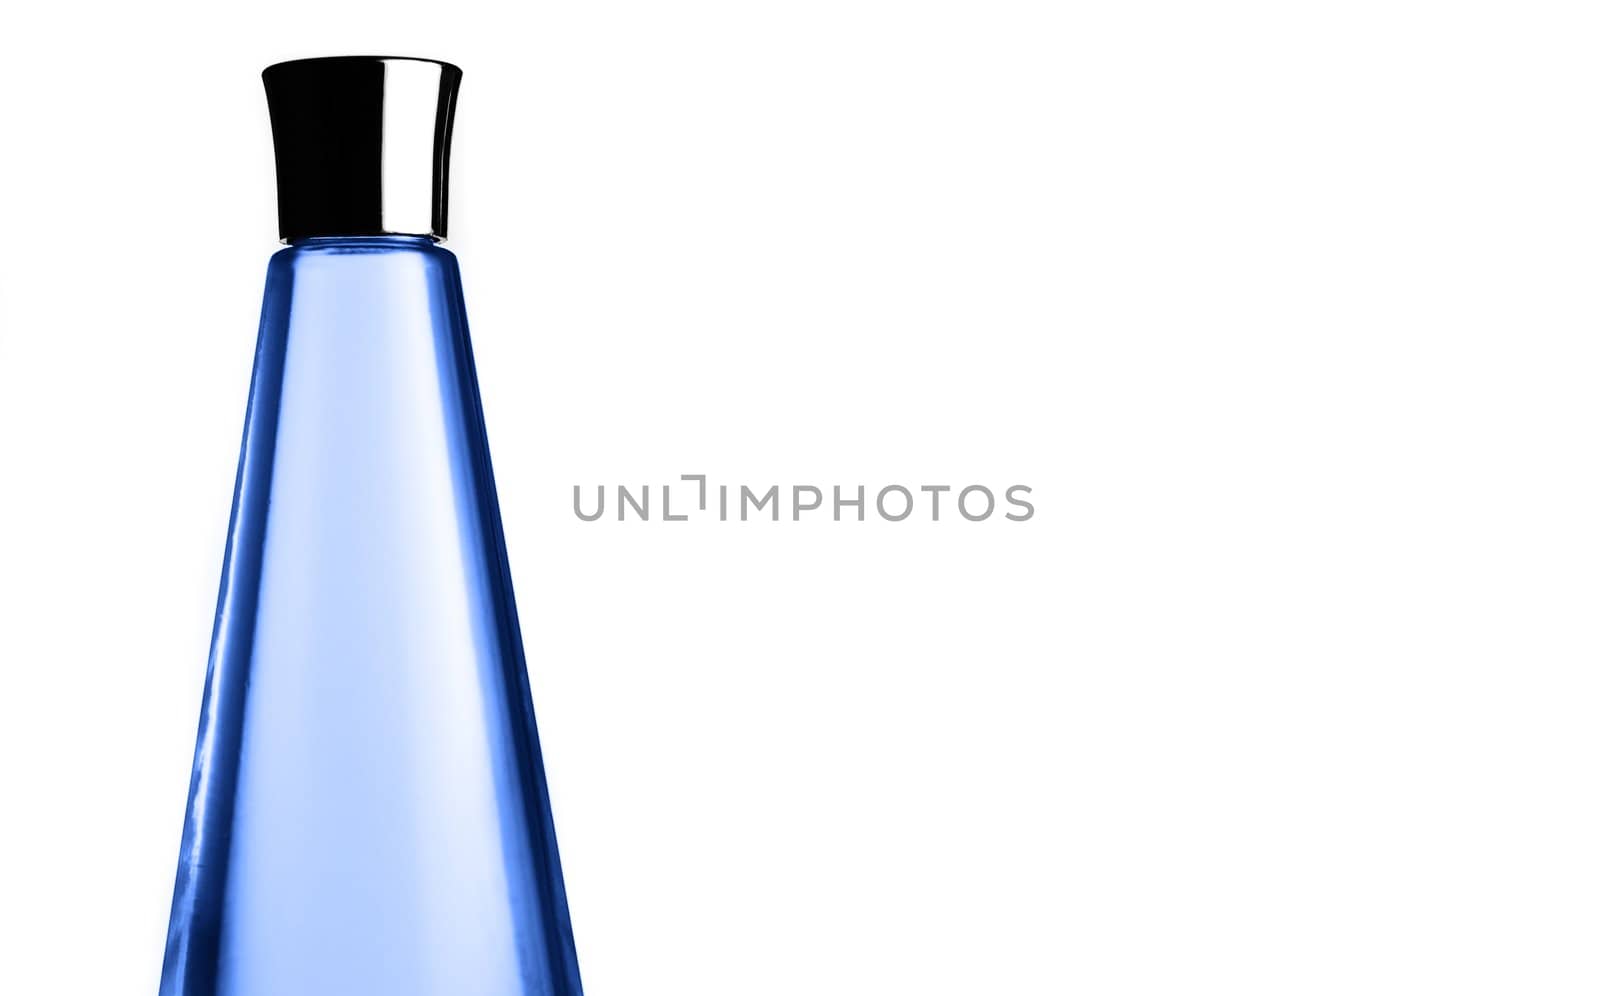 Blue, shiny, modern bottle against a white background.